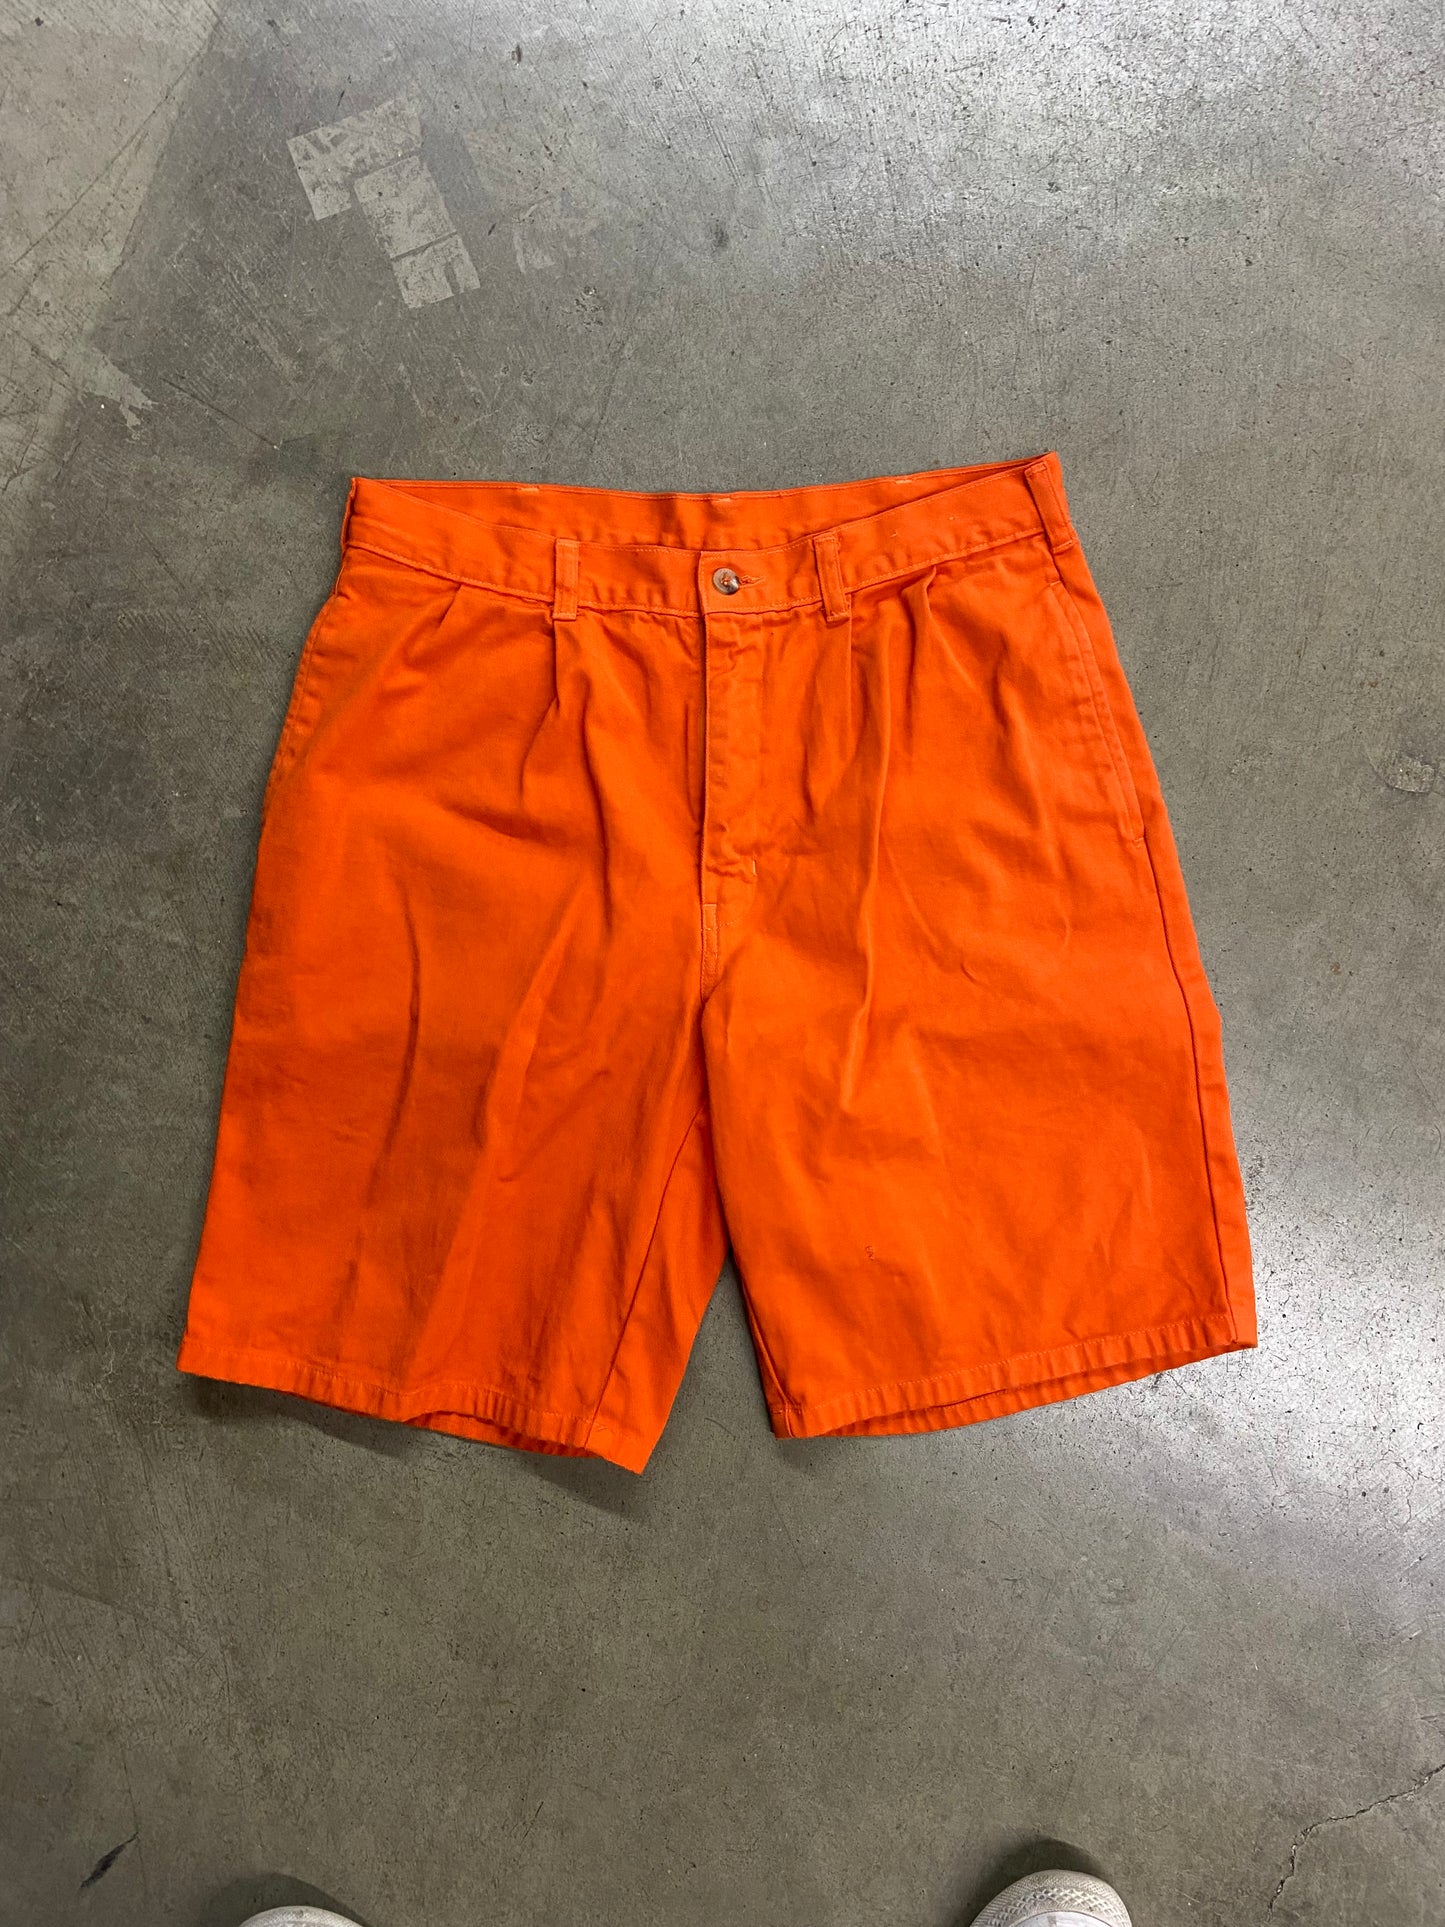 Duck Head Orange Shorts sz 32